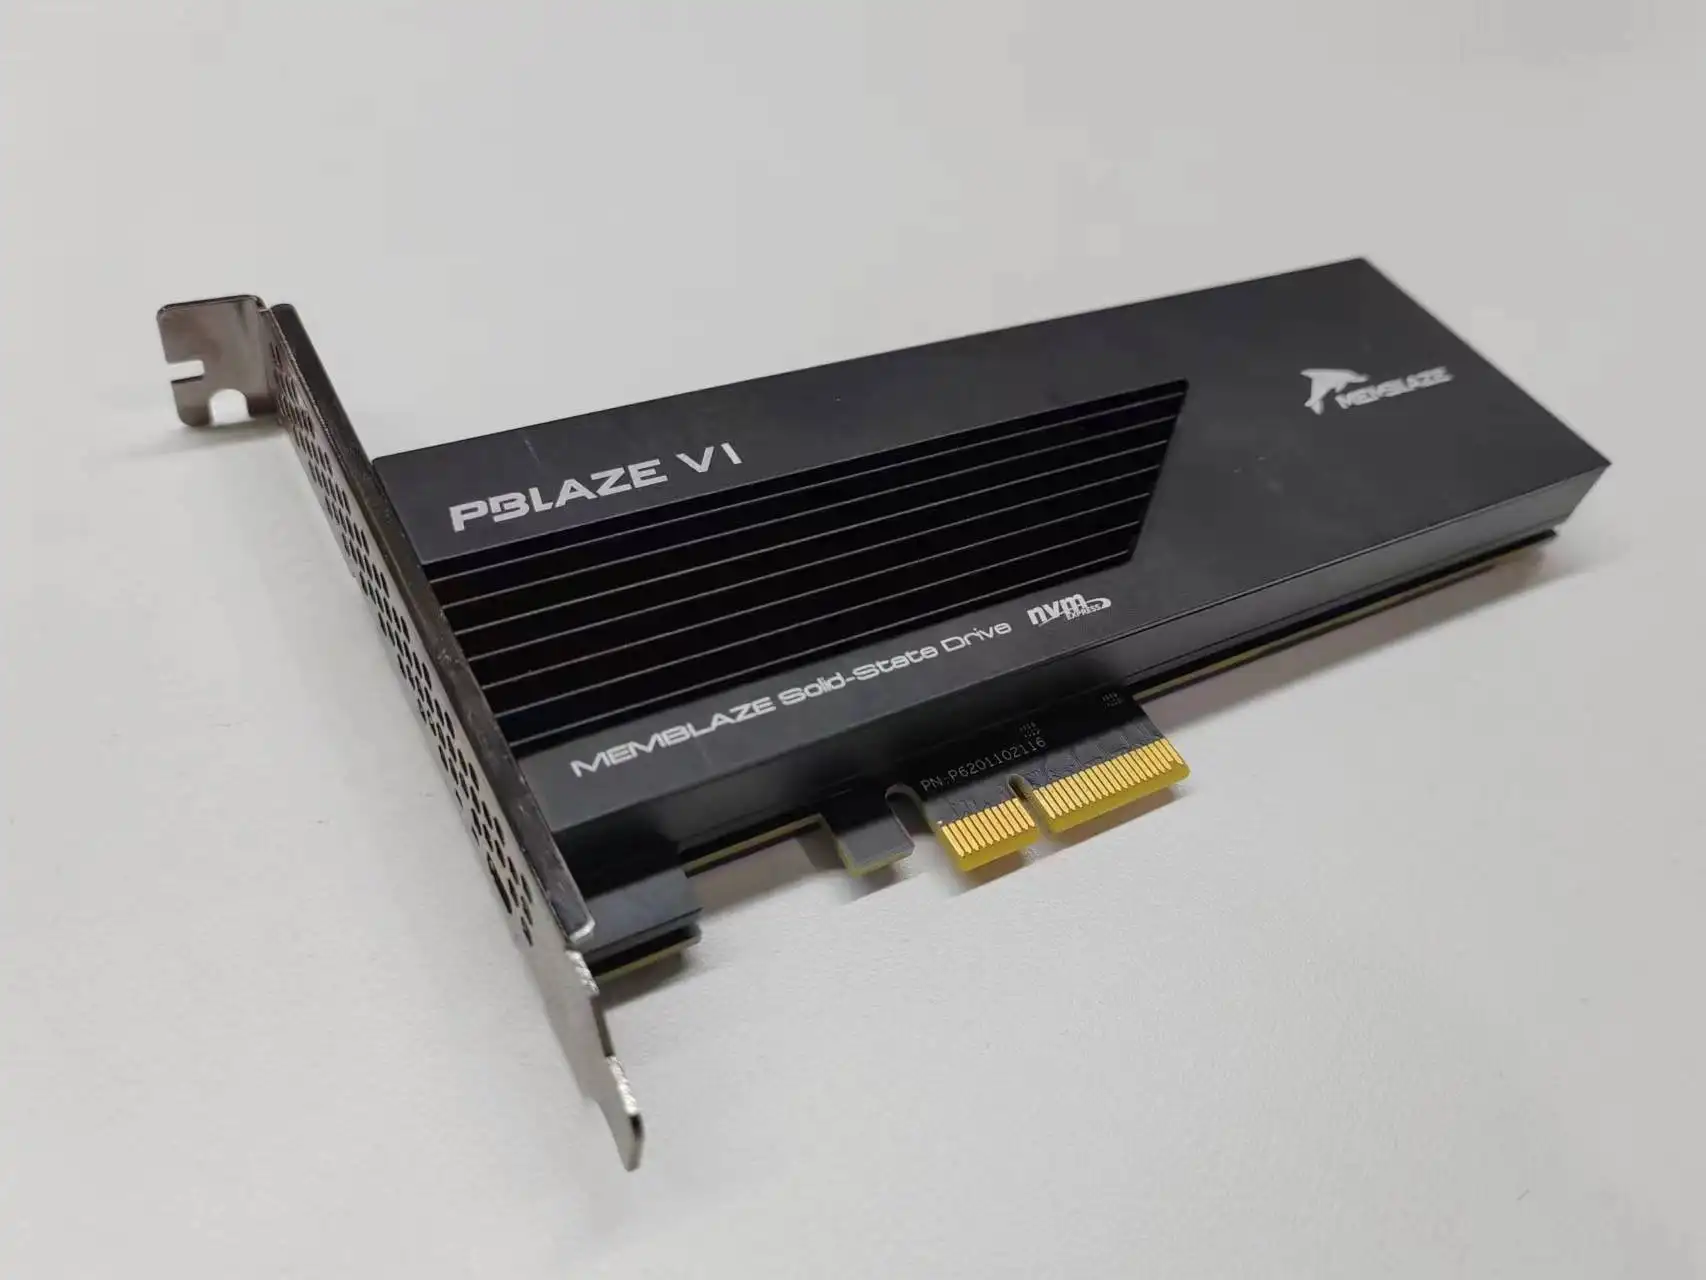 PBlaze6 6530 SATA SSD 3D Nand NVMe1.4 daha iyi performans PCIe 4.0 AIC 1.92T 2T SSD